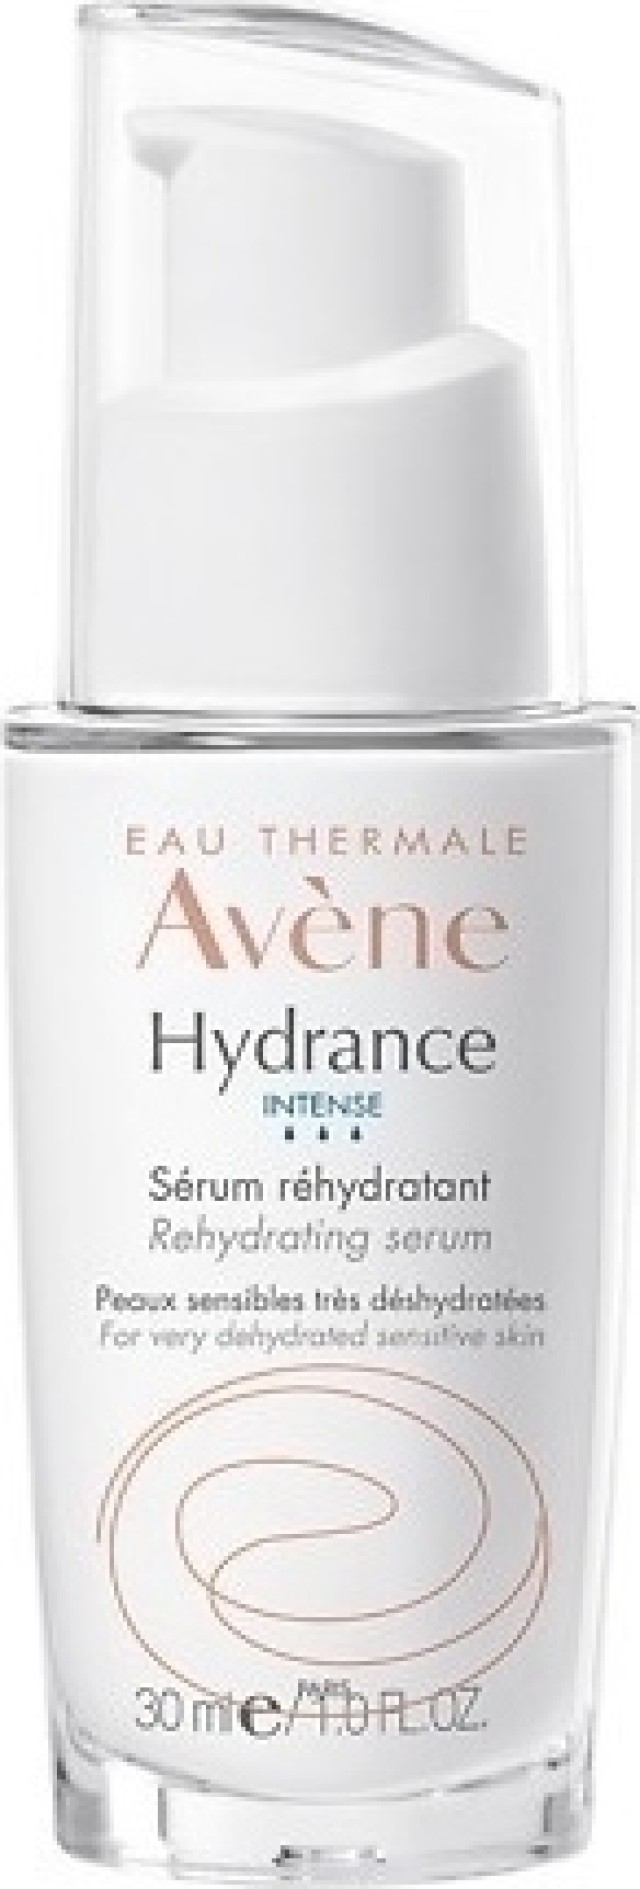 Avene Hydrance Intense Serum Rehydratant 30ml